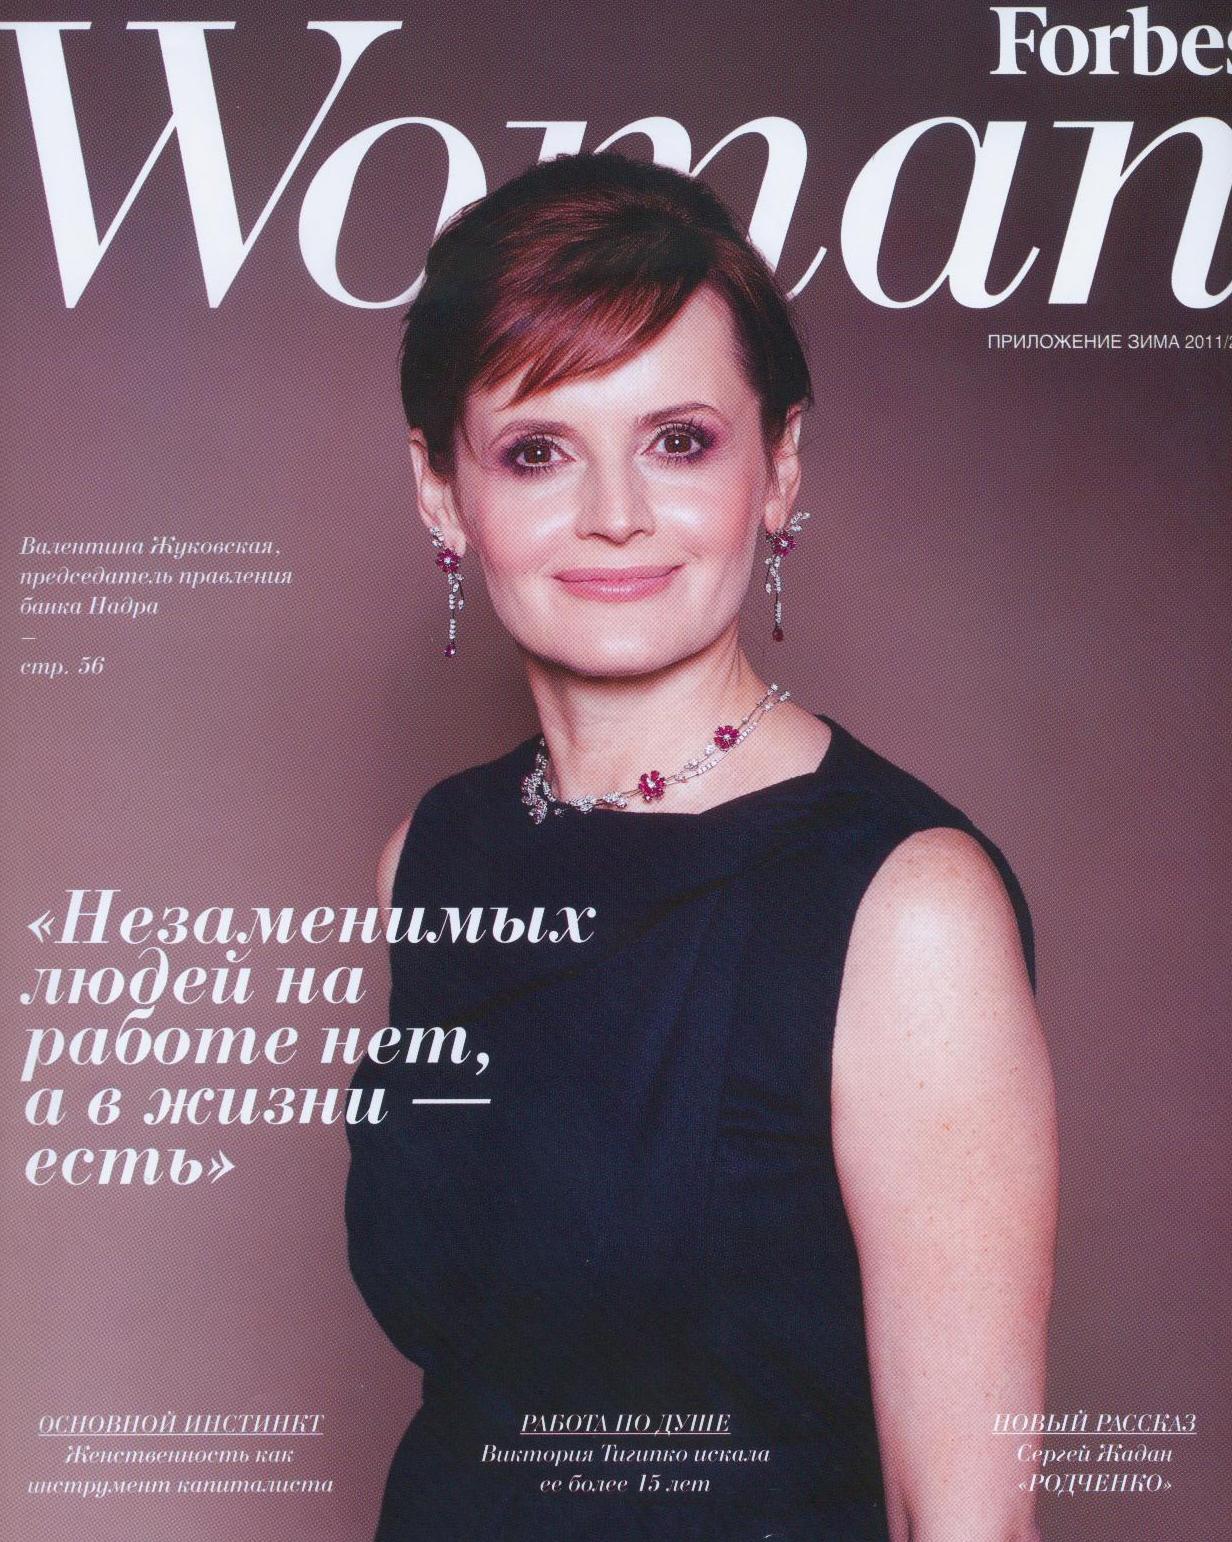 Forbes , Ukraine